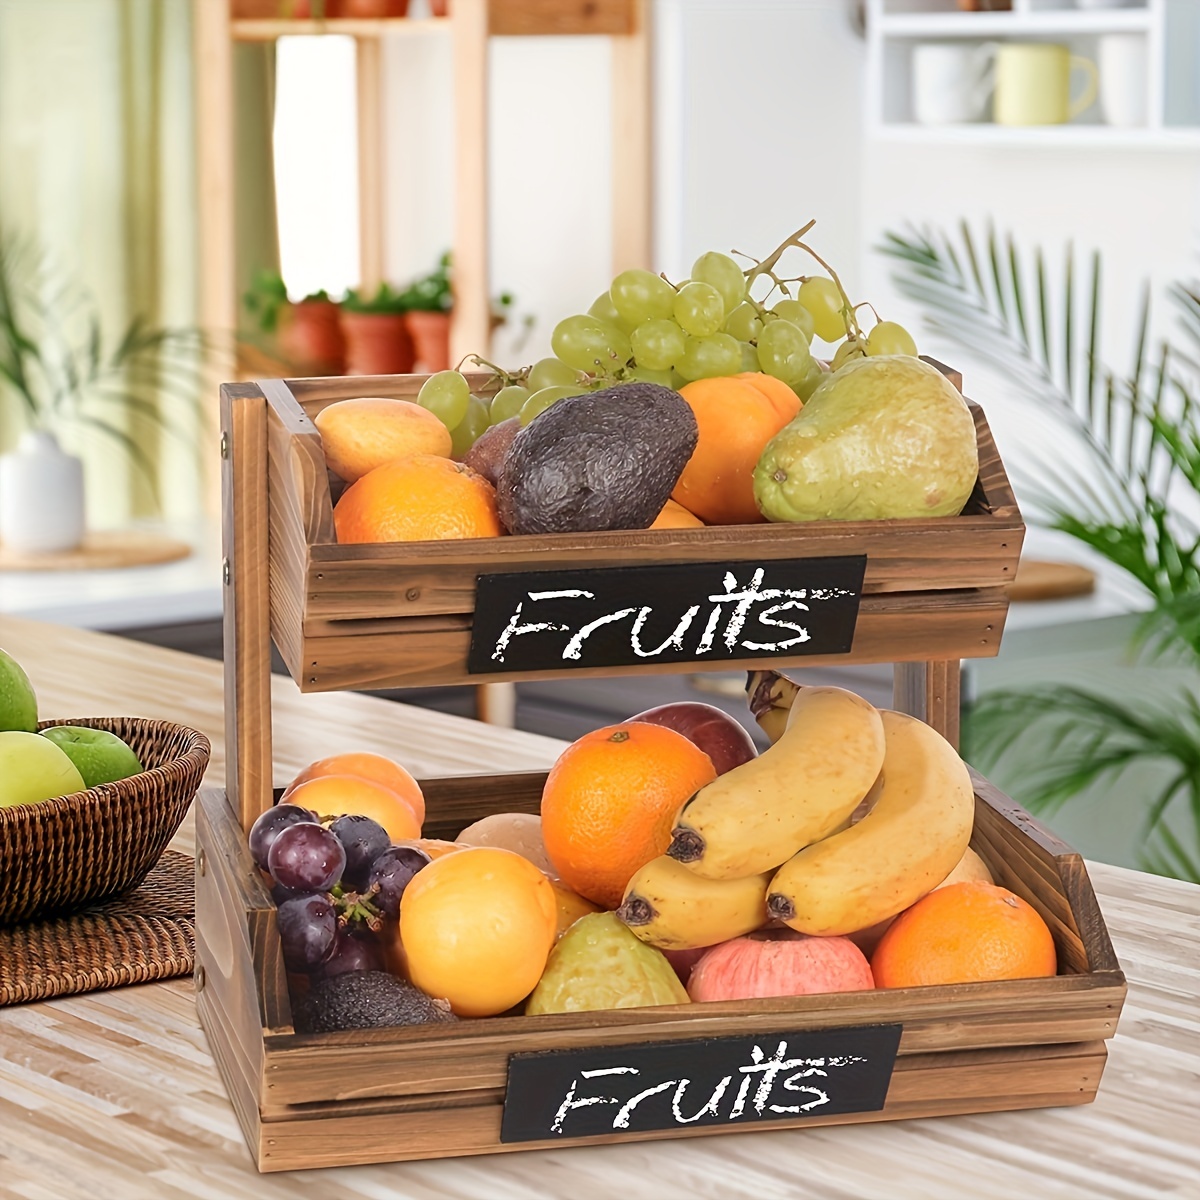 Estante Organizador Frutas Verduras Hogar Multifuncional